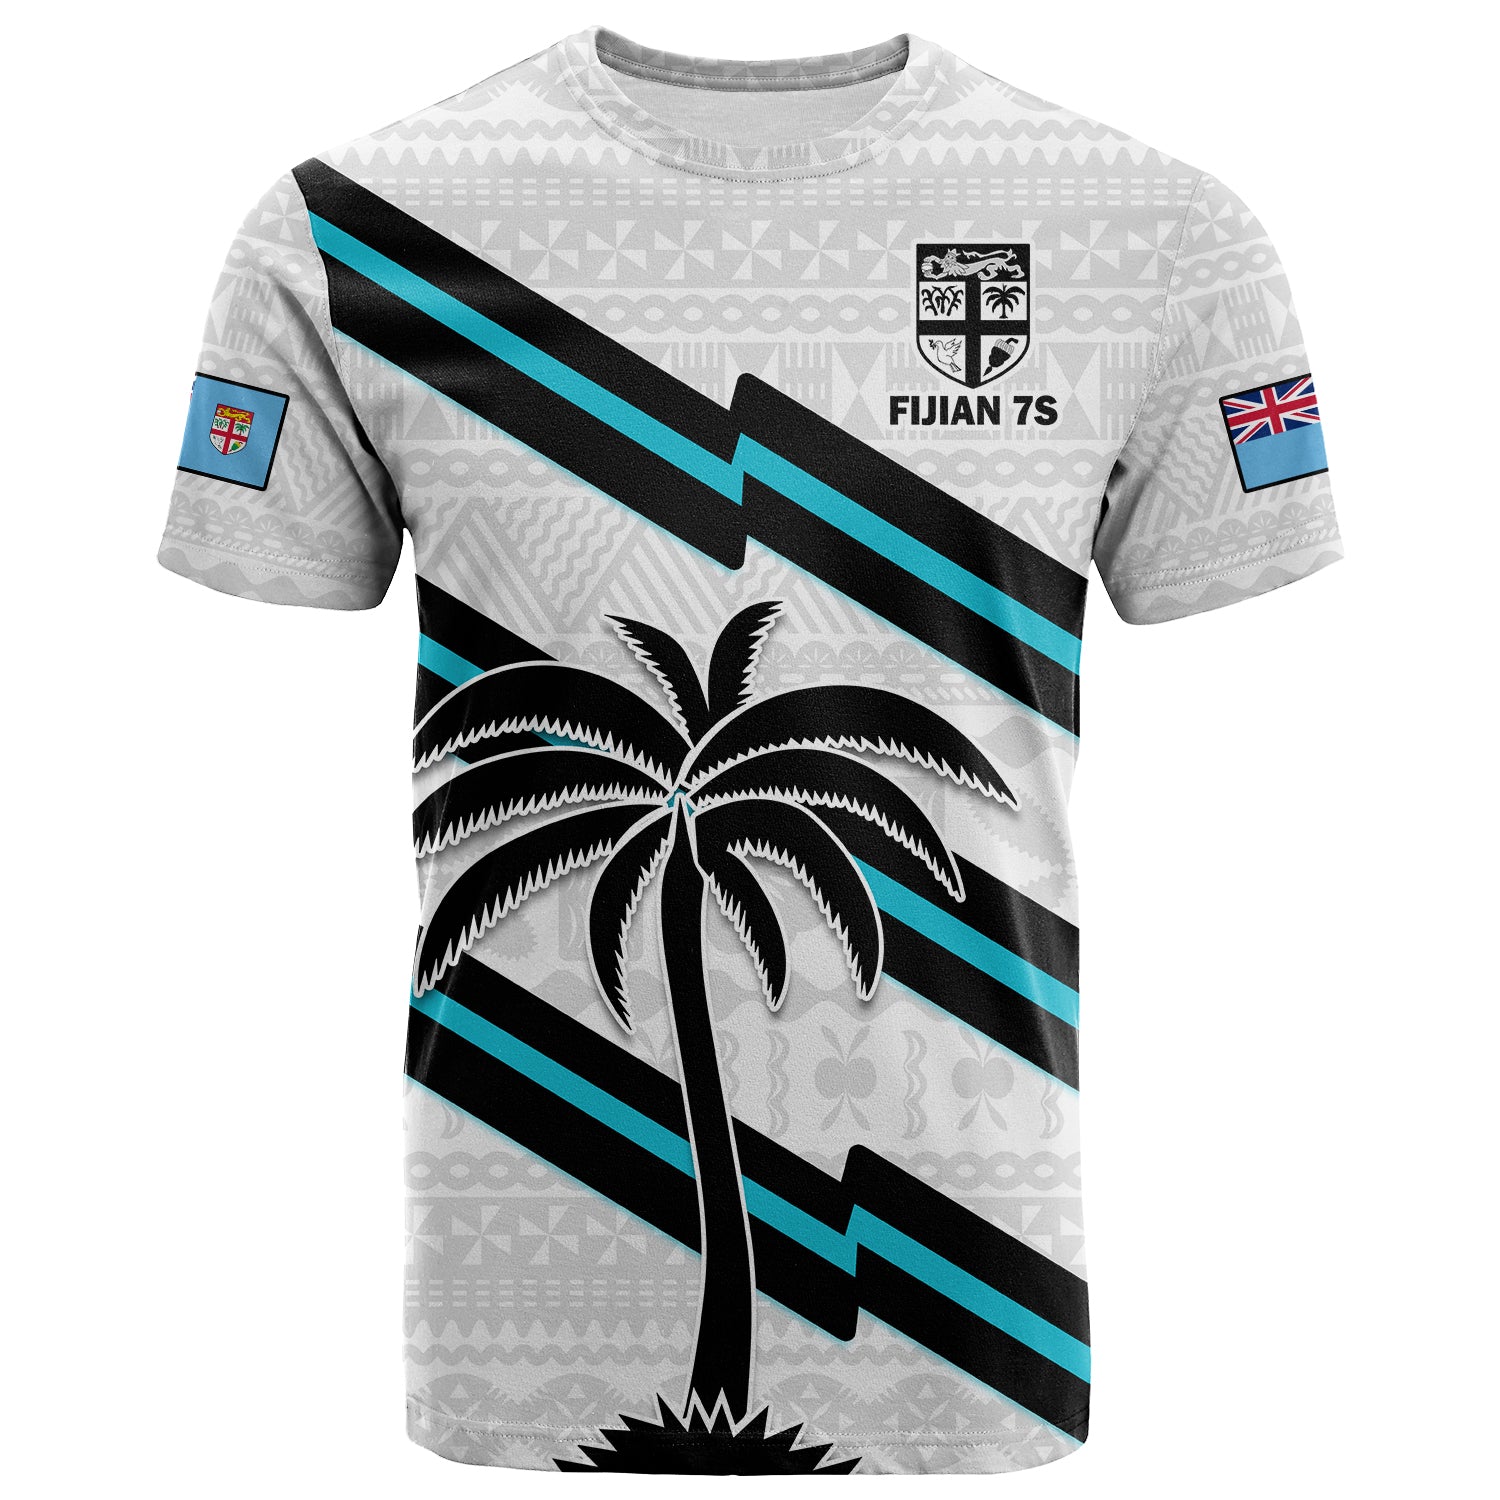 Fiji Rugby Tapa Pattern Fijian 7s White T Shirt LT14 White - Polynesian Pride